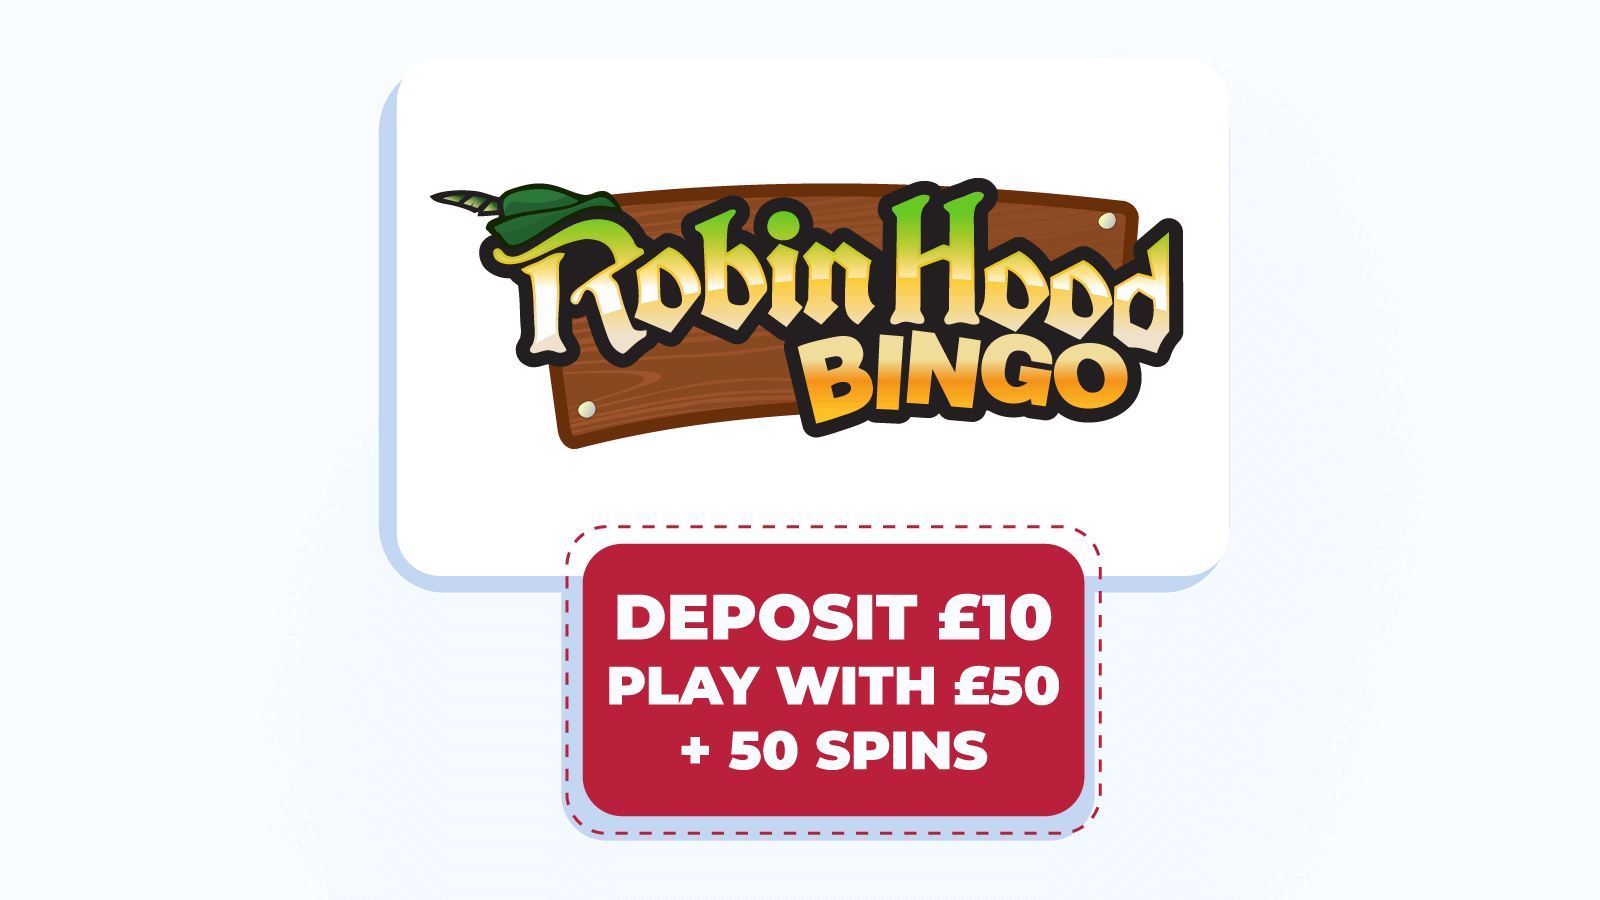 Deposit £10, play with £50 + 50 spins at RobinHood Bingo – best 400% deposit bonus